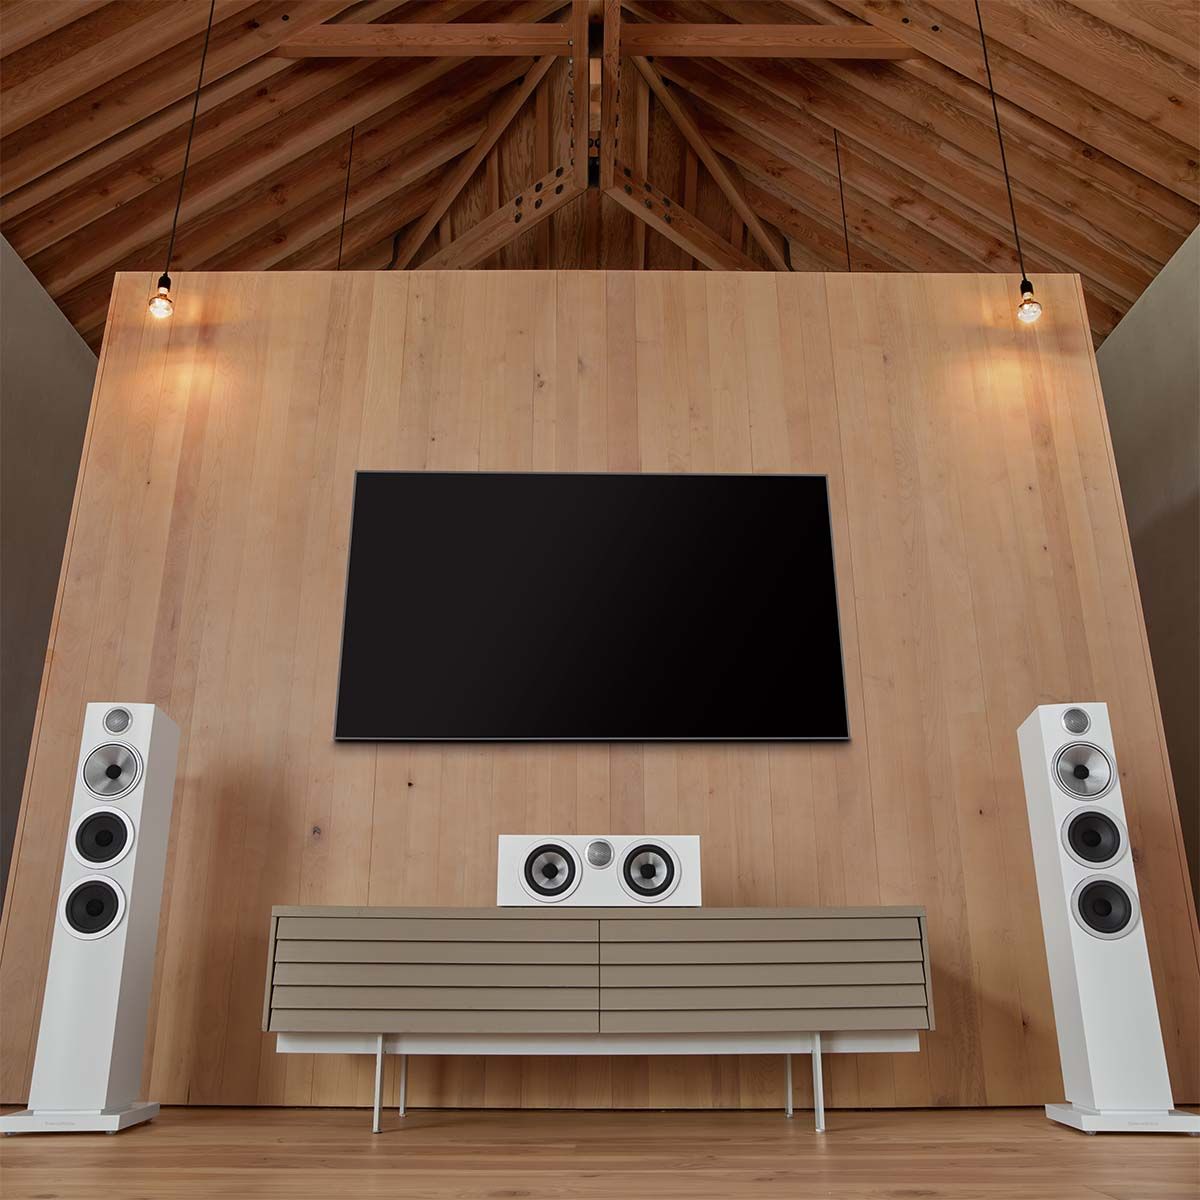 Bowers & Wilkins 704 S3 3-Way Floorstanding Loudspeaker in home theater setup with tv